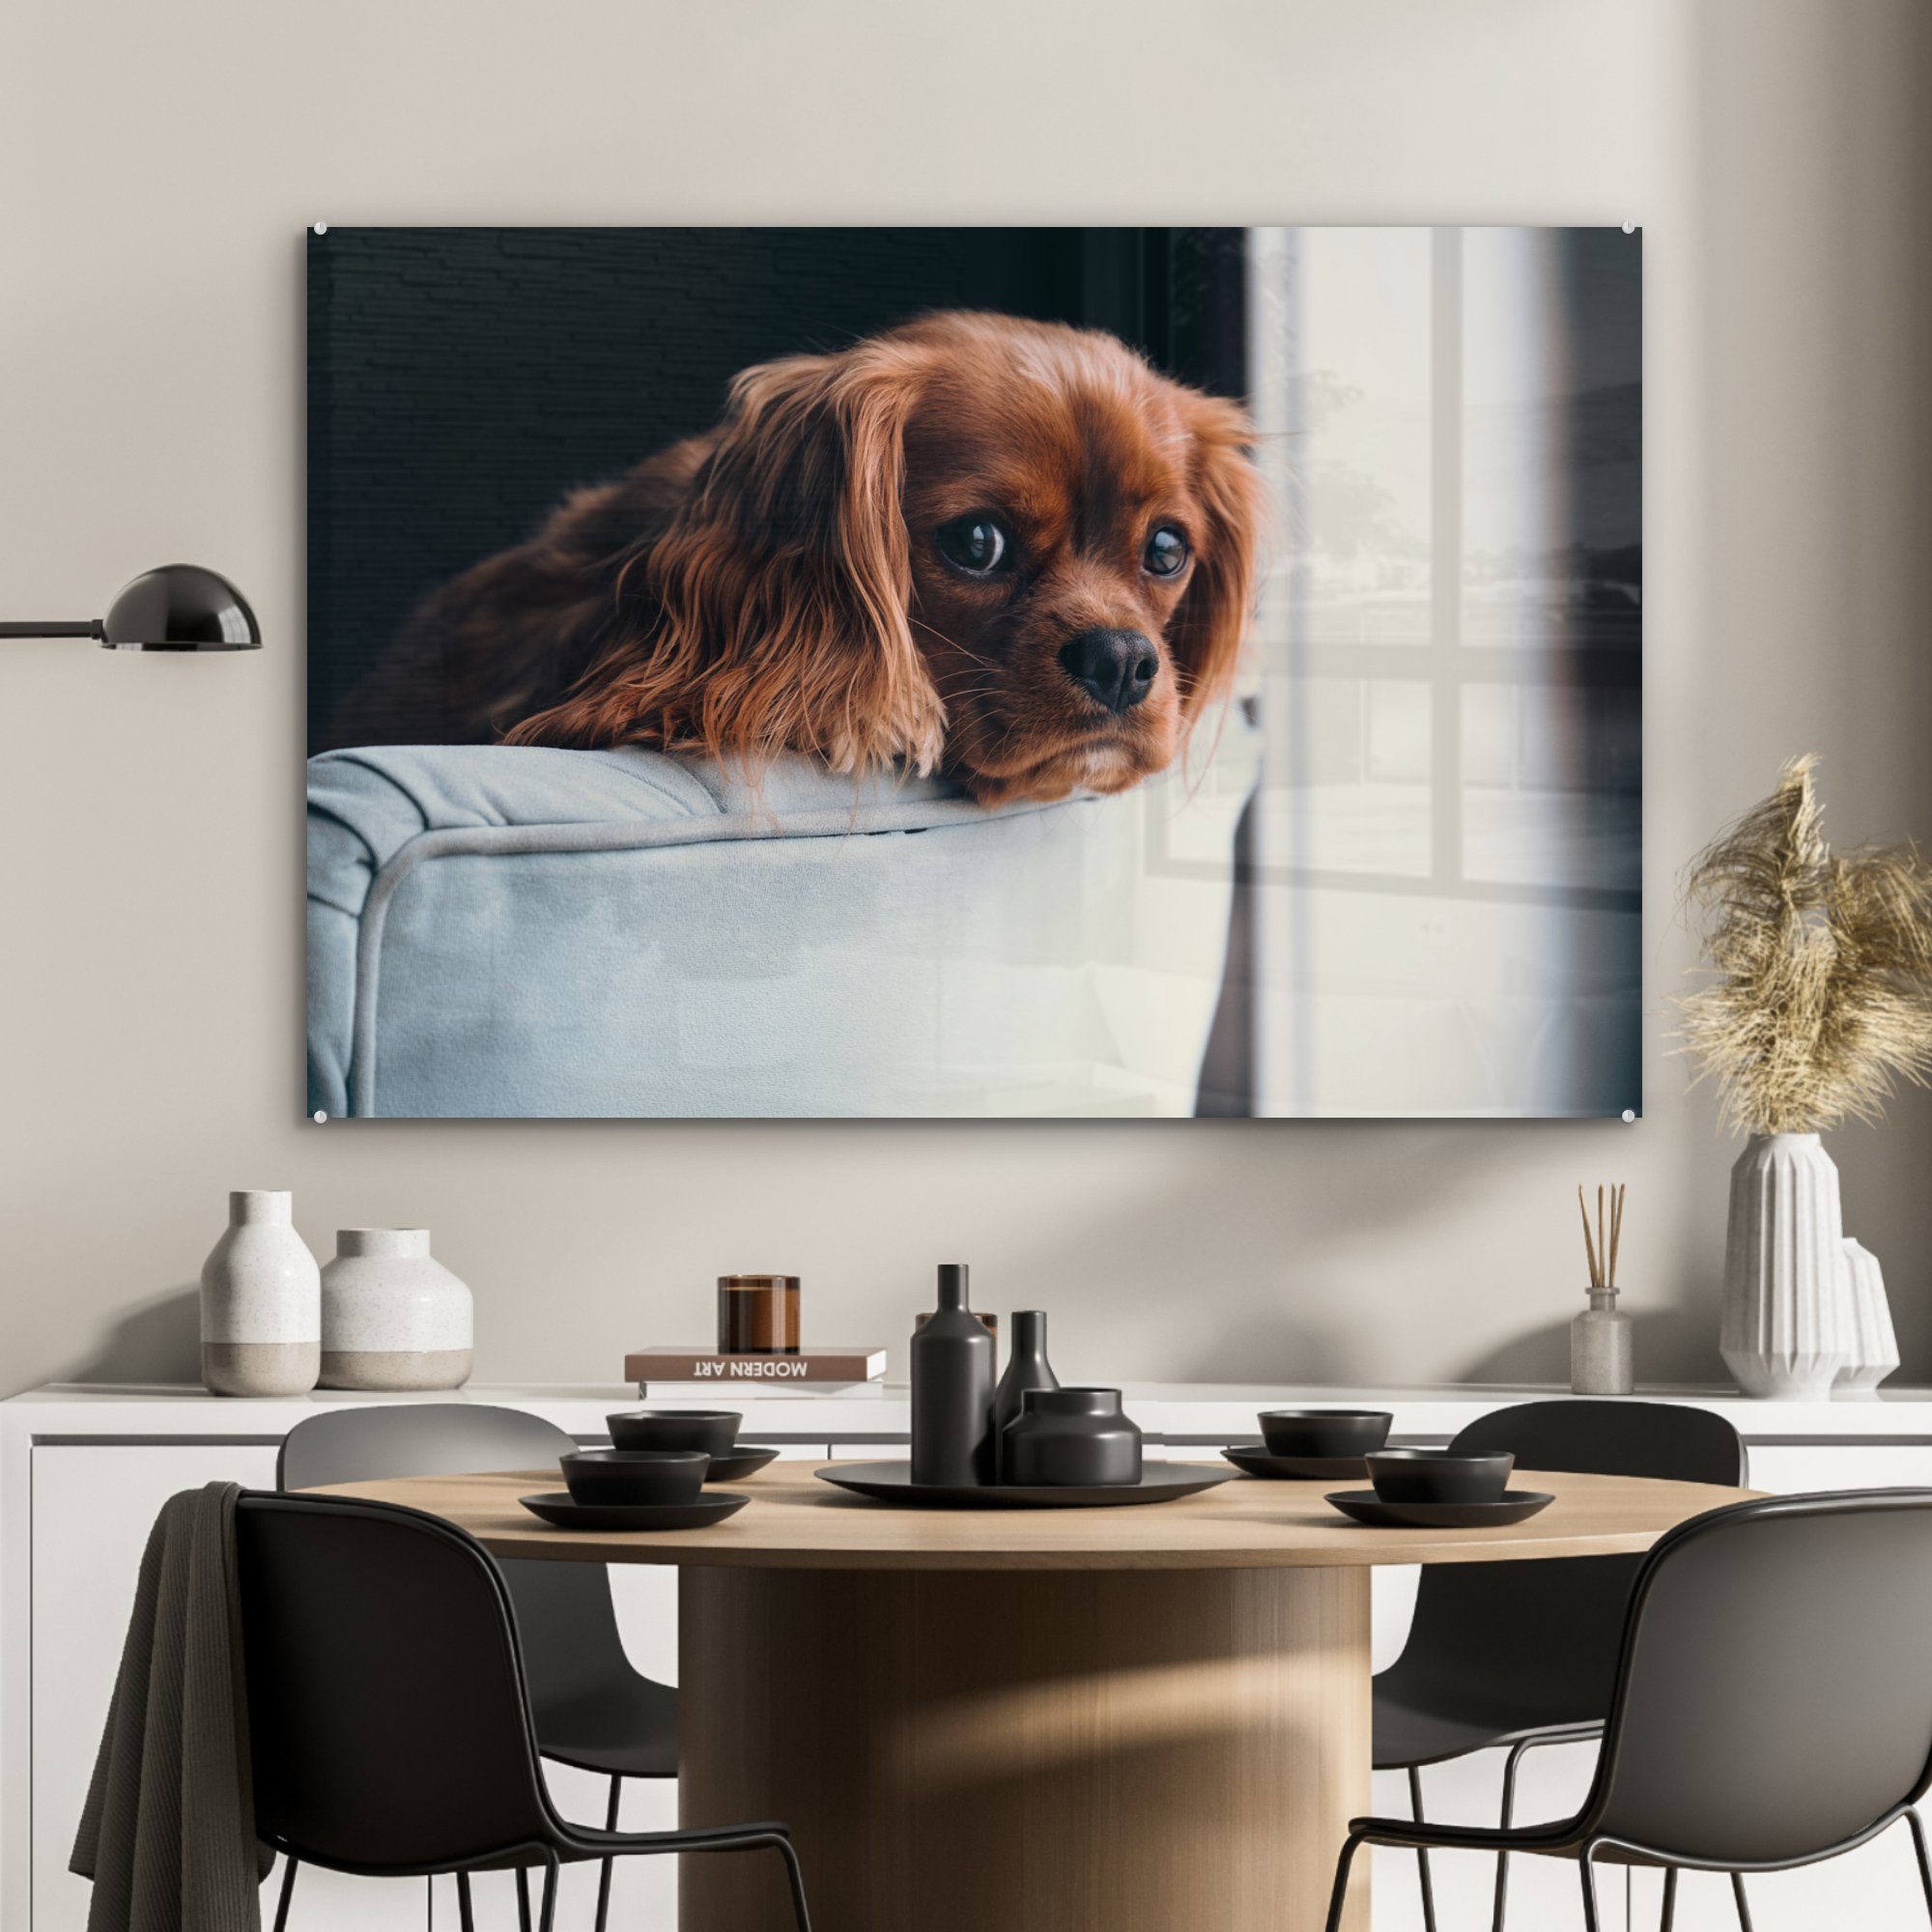 Kopf, Hund St), MuchoWow & - Acrylglasbild Wohnzimmer Schlafzimmer Stuhl (1 Acrylglasbilder -